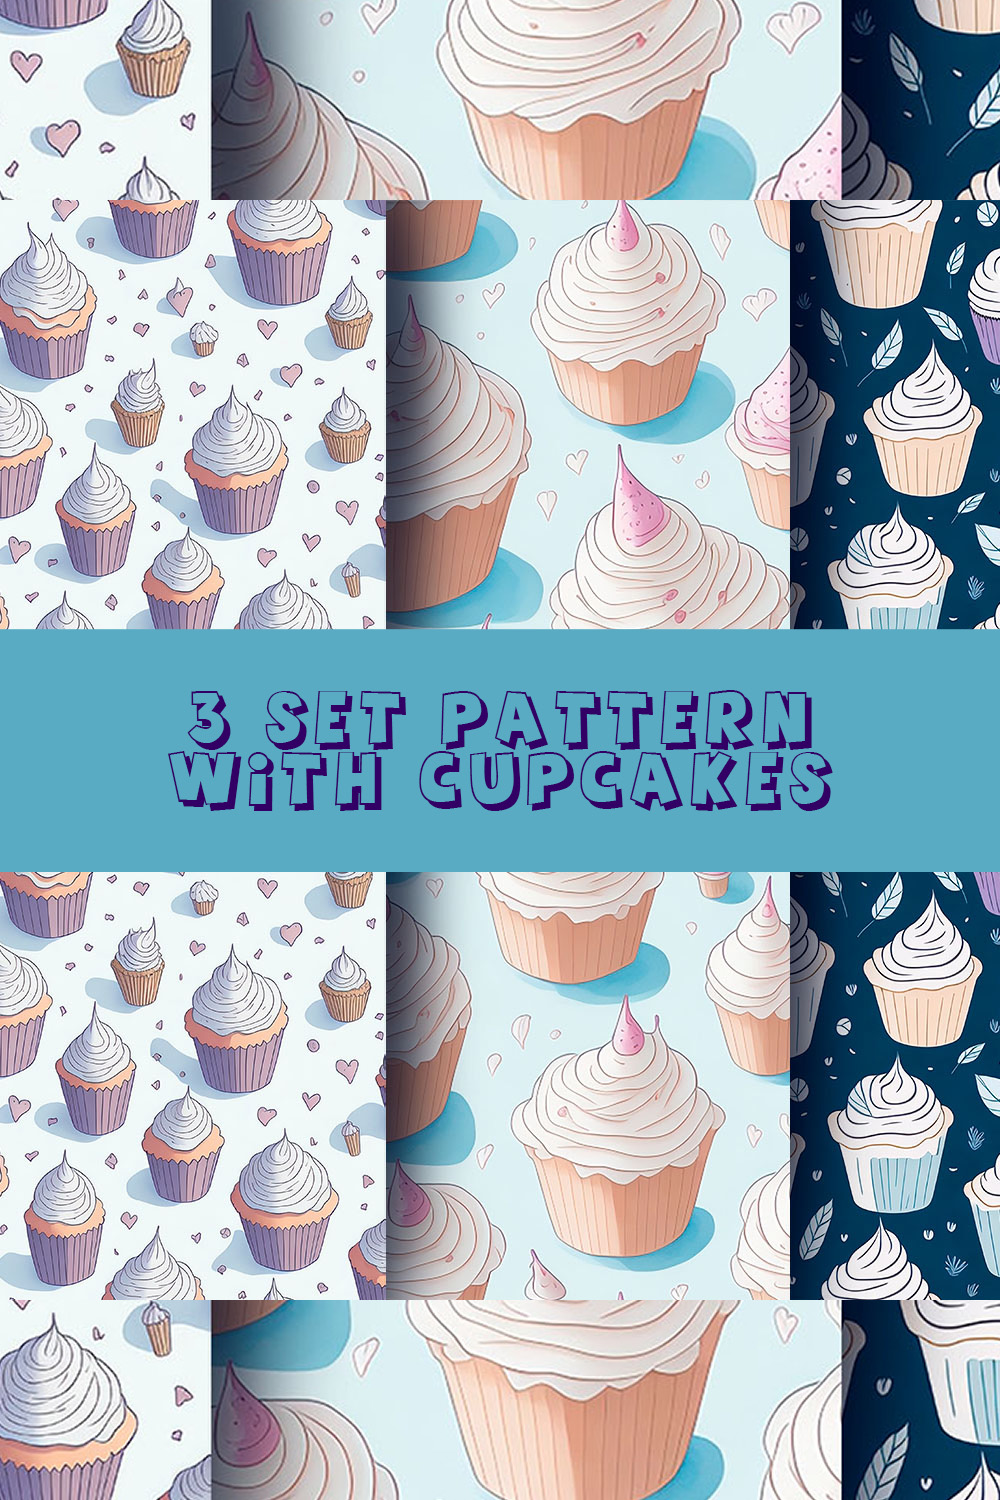 cupcake pattern designs 3 set pinterest preview image.